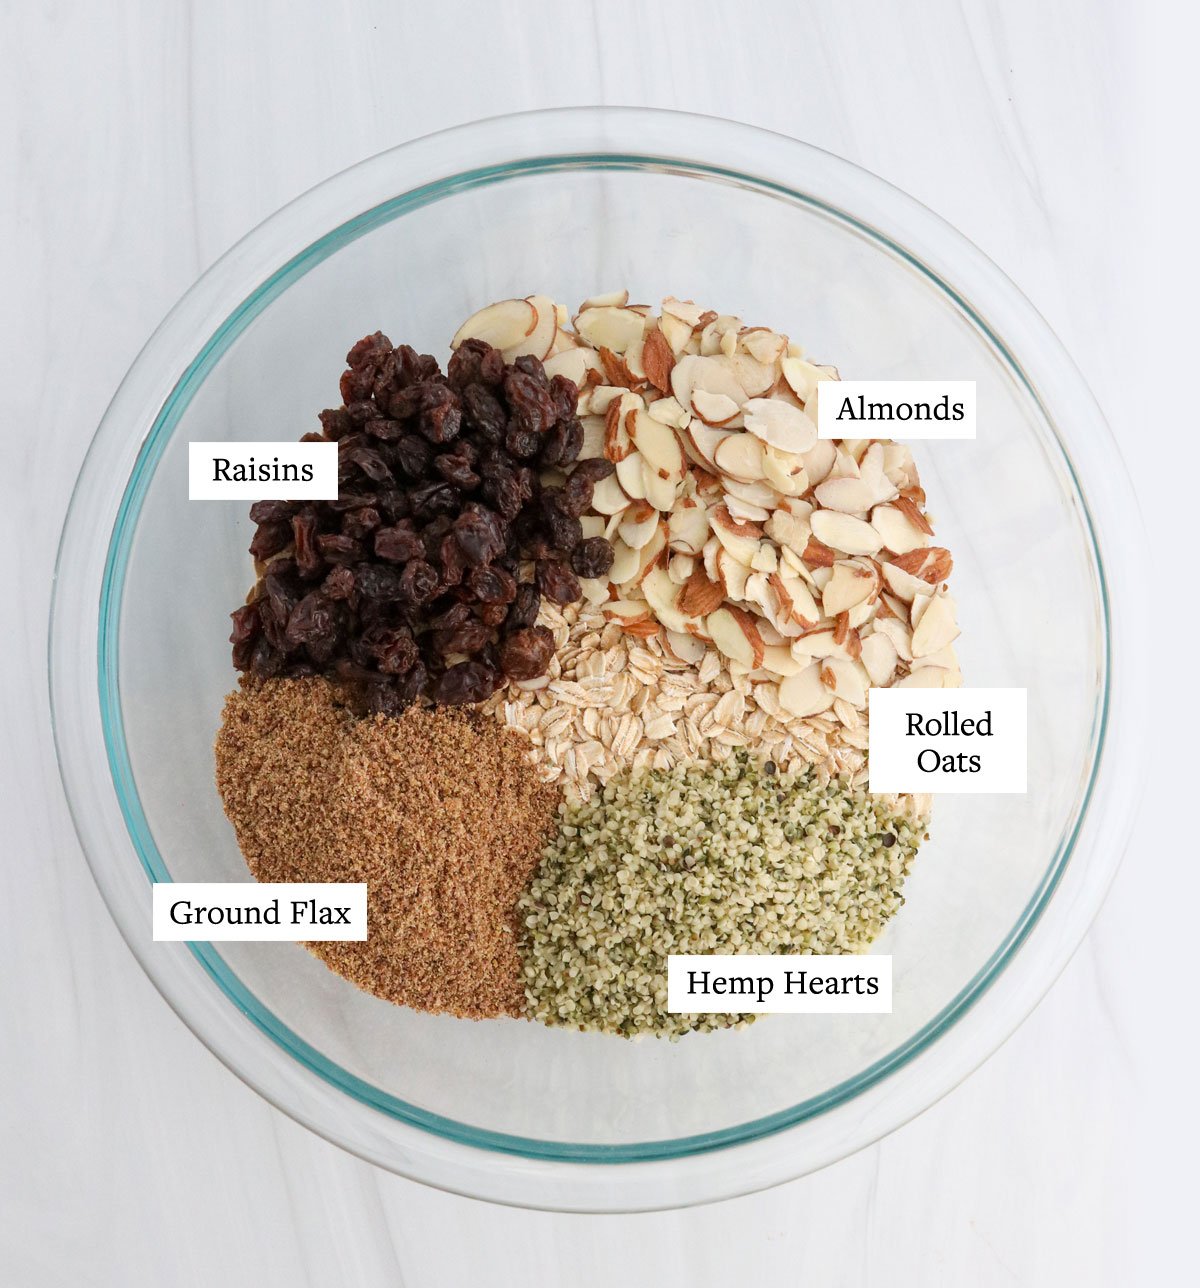 gluten-free muesli ingredients labeled in glass bowl.